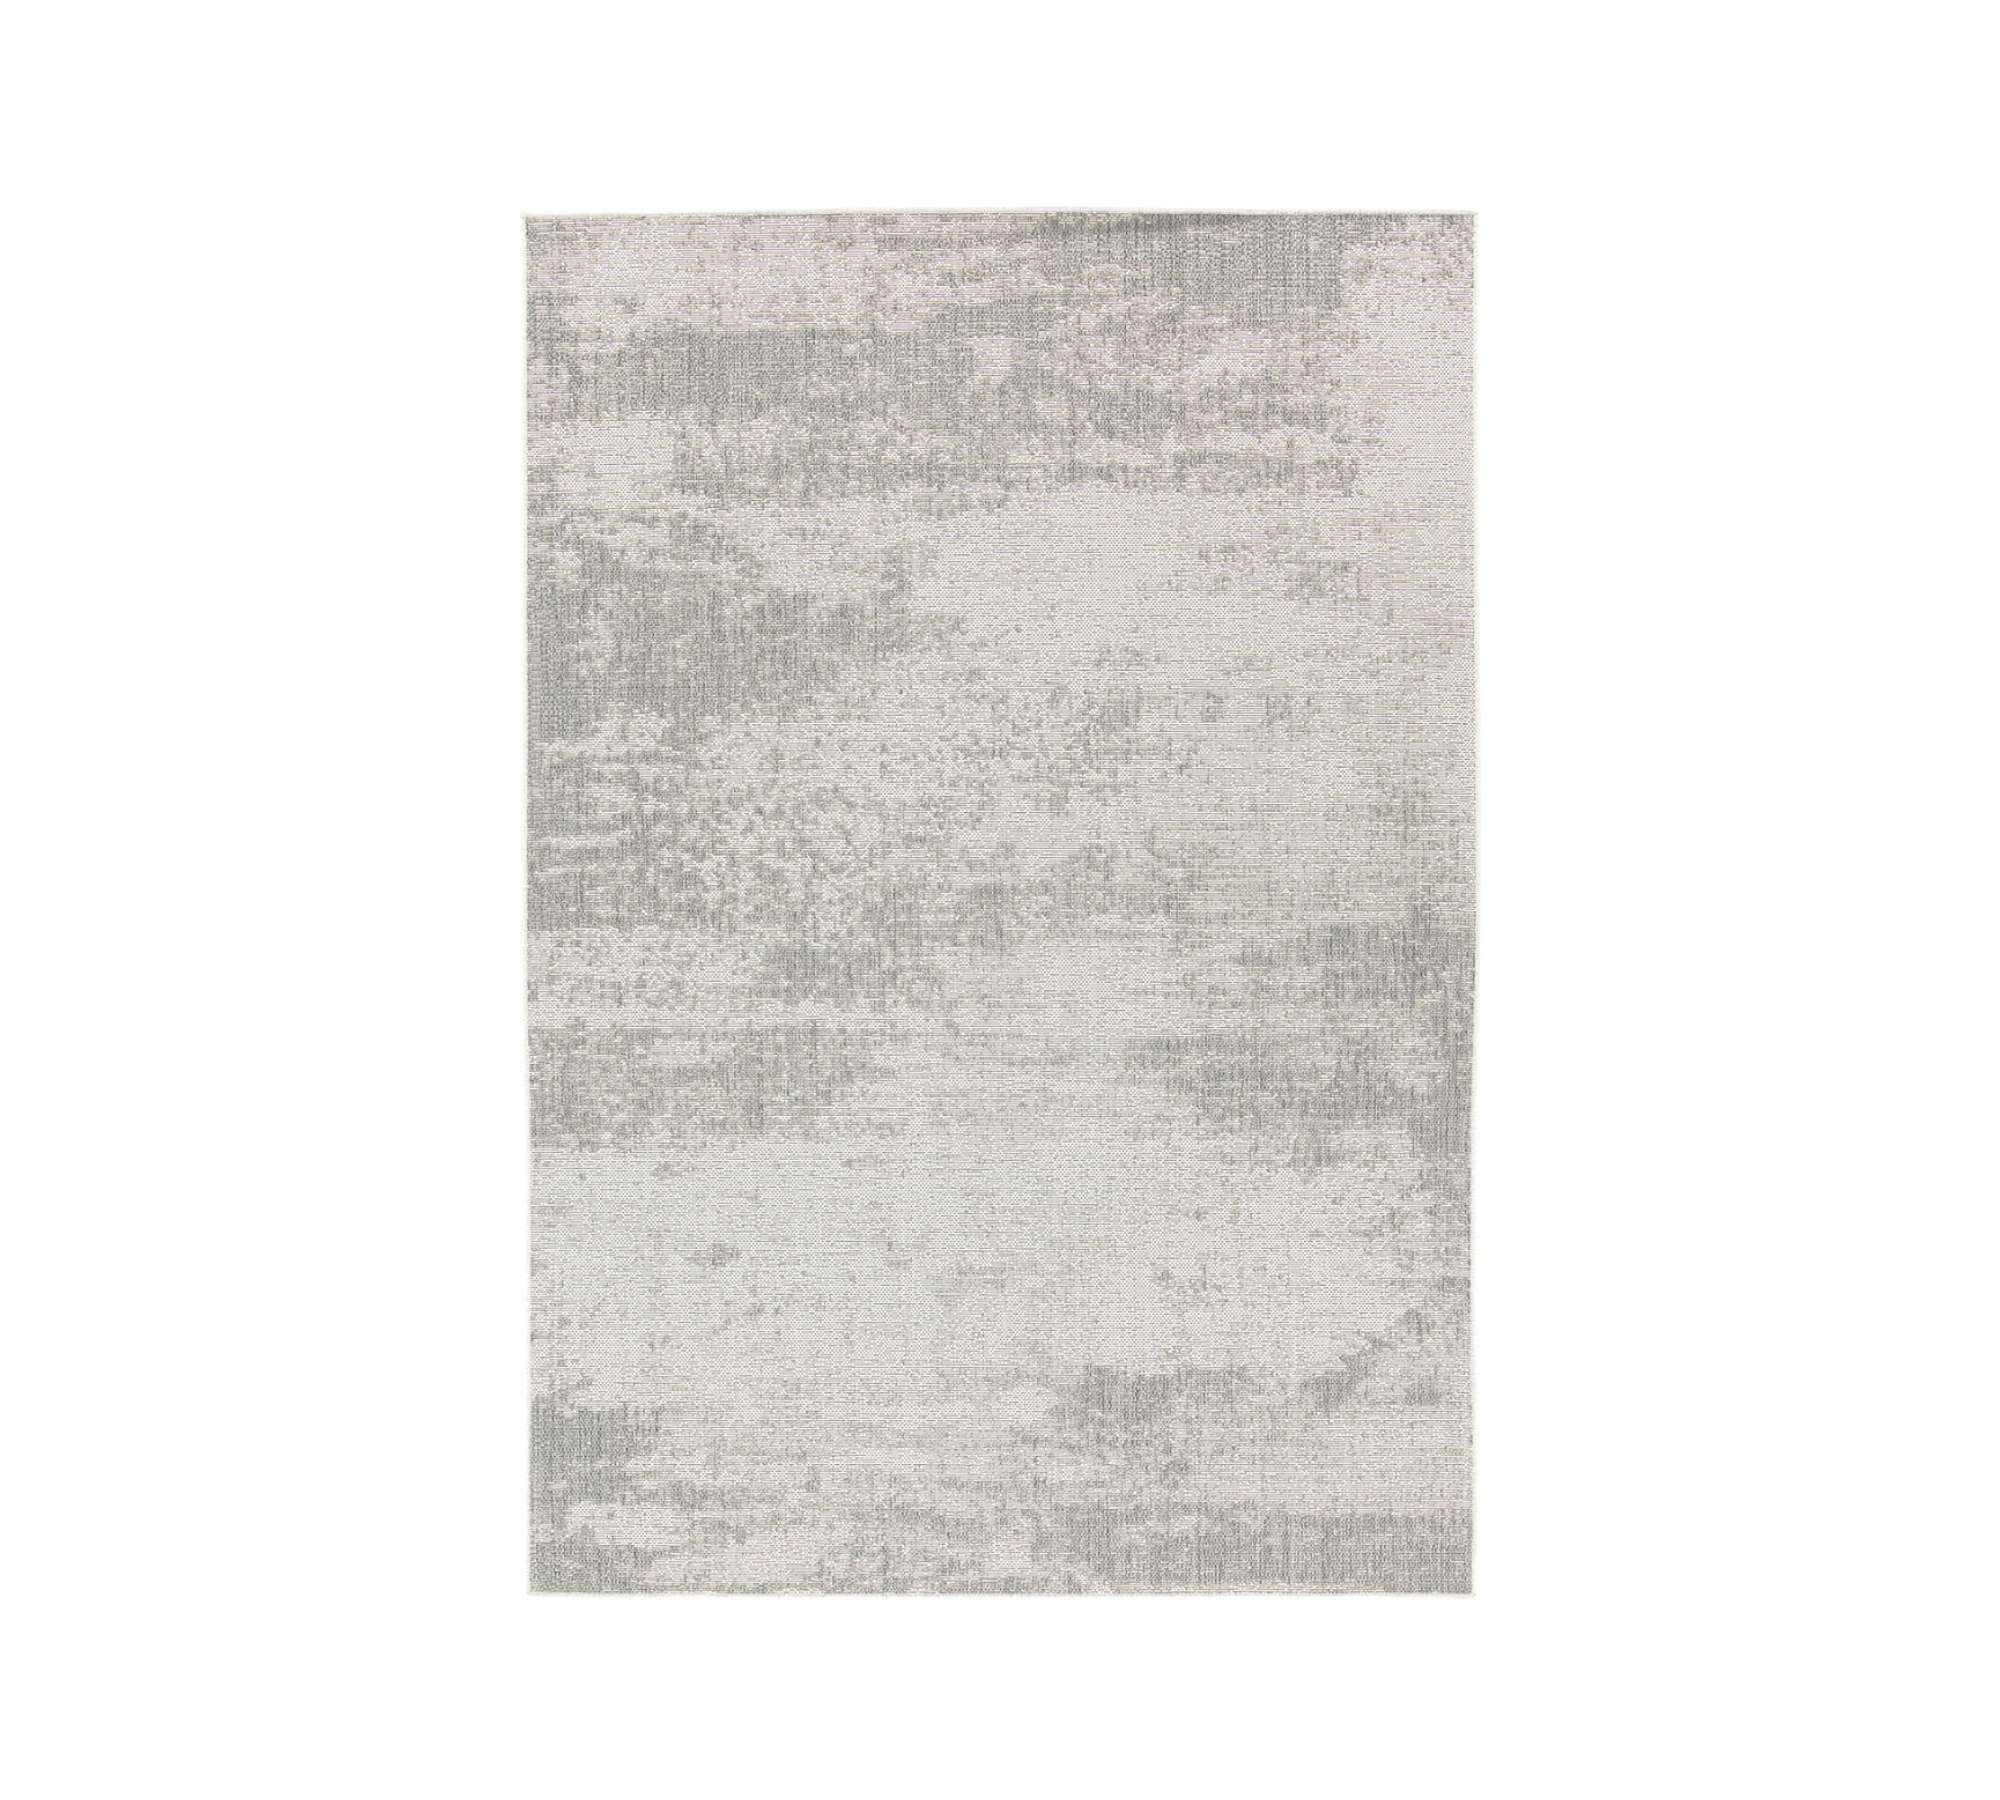 Outdoorteppich Textil Silber Grau 0